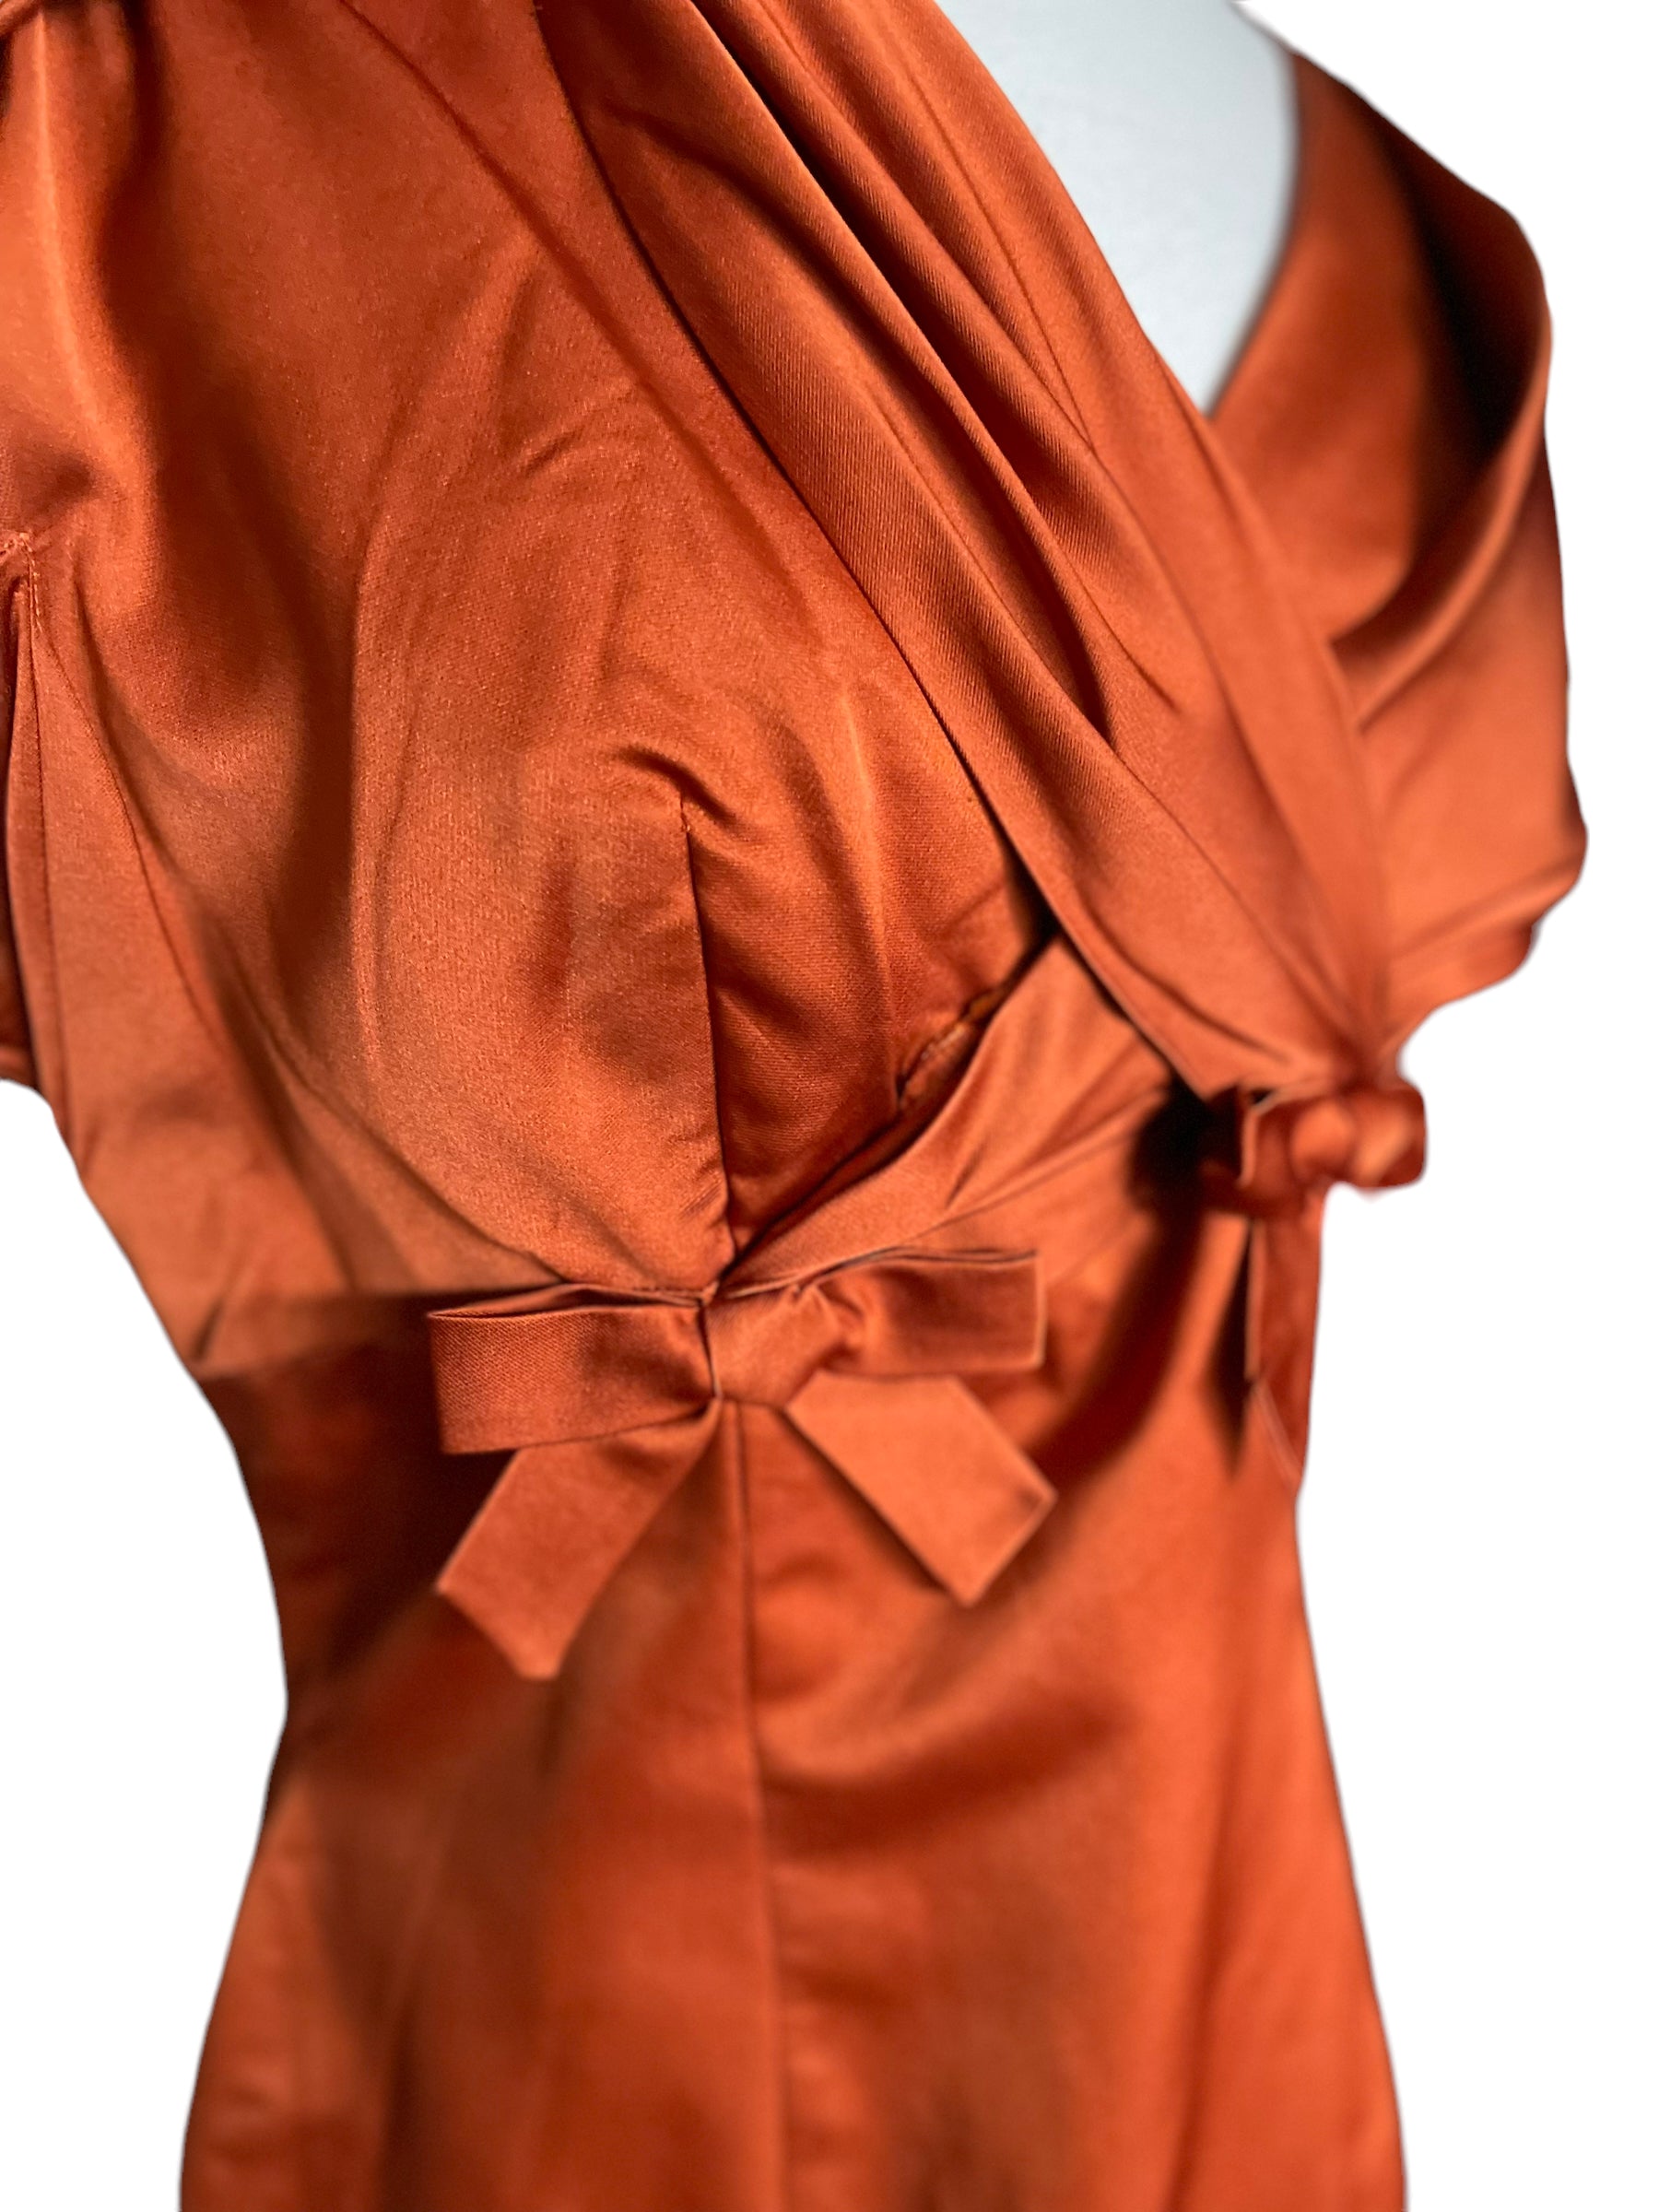 Right side of bodice under the collar of Vintage 1950s Burnt Orange Silk Dress SZ M